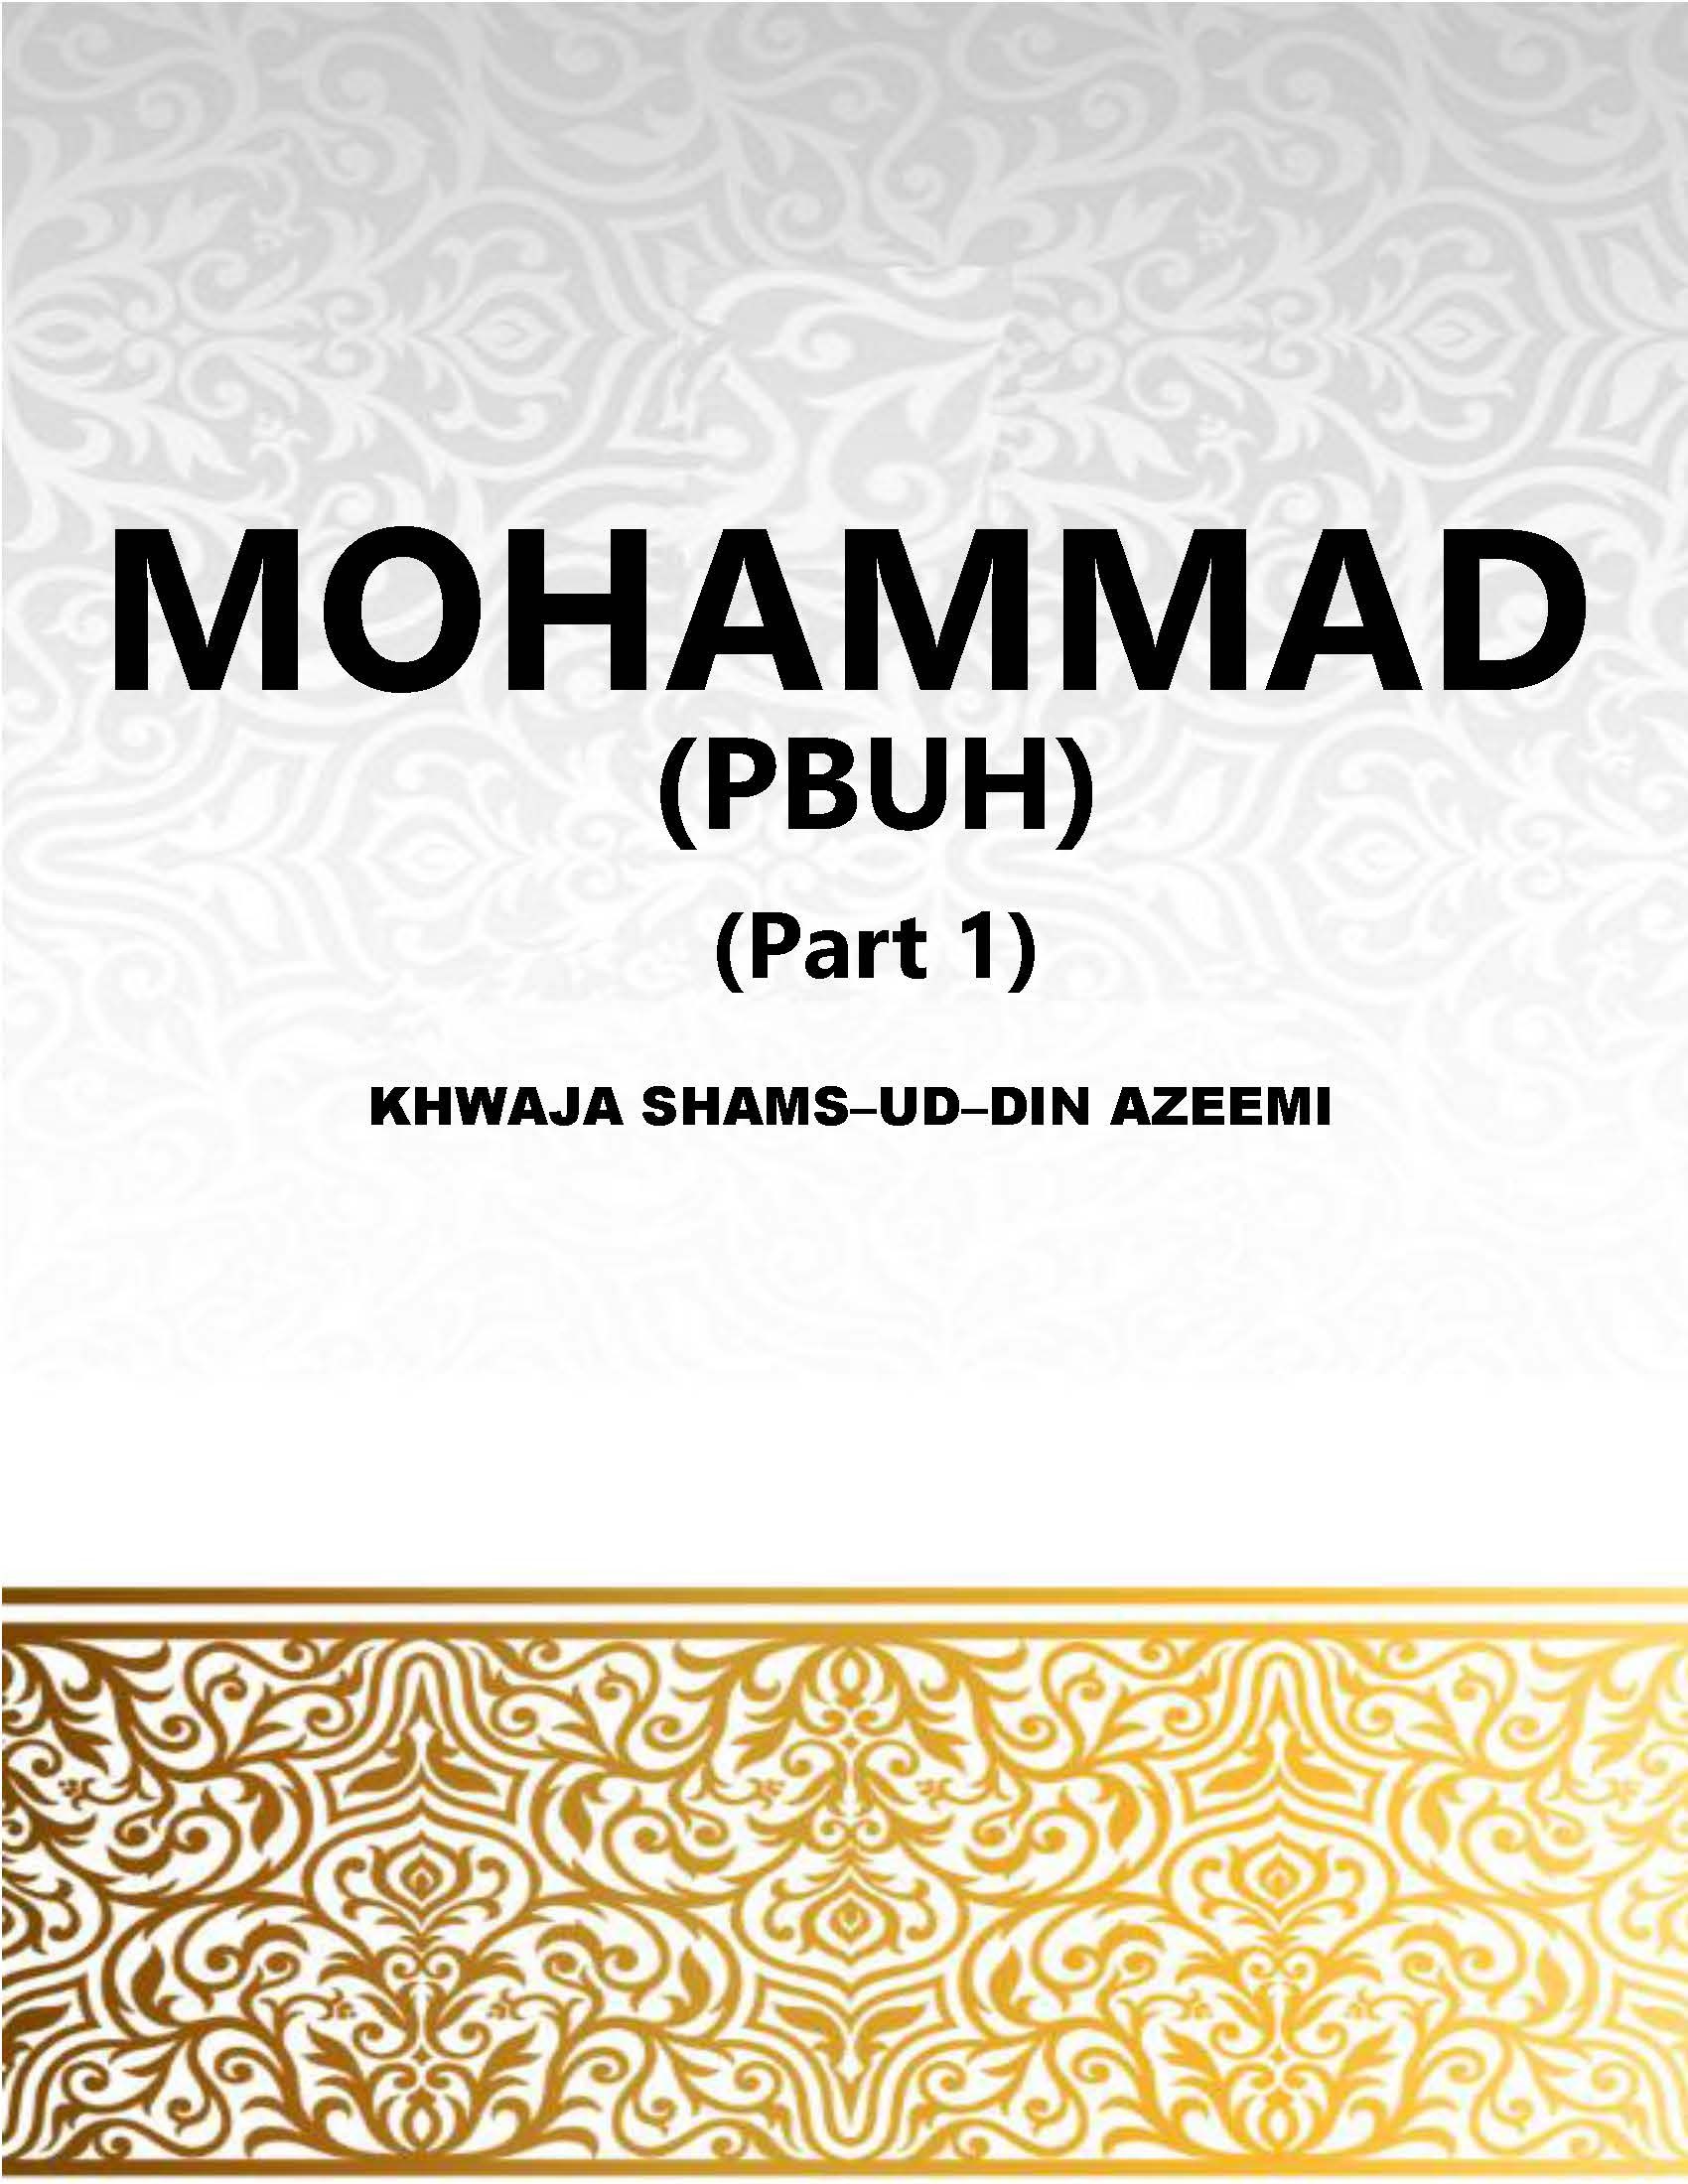 MOHAMMAD (PBUH)  The Prophet Of God -  Part I